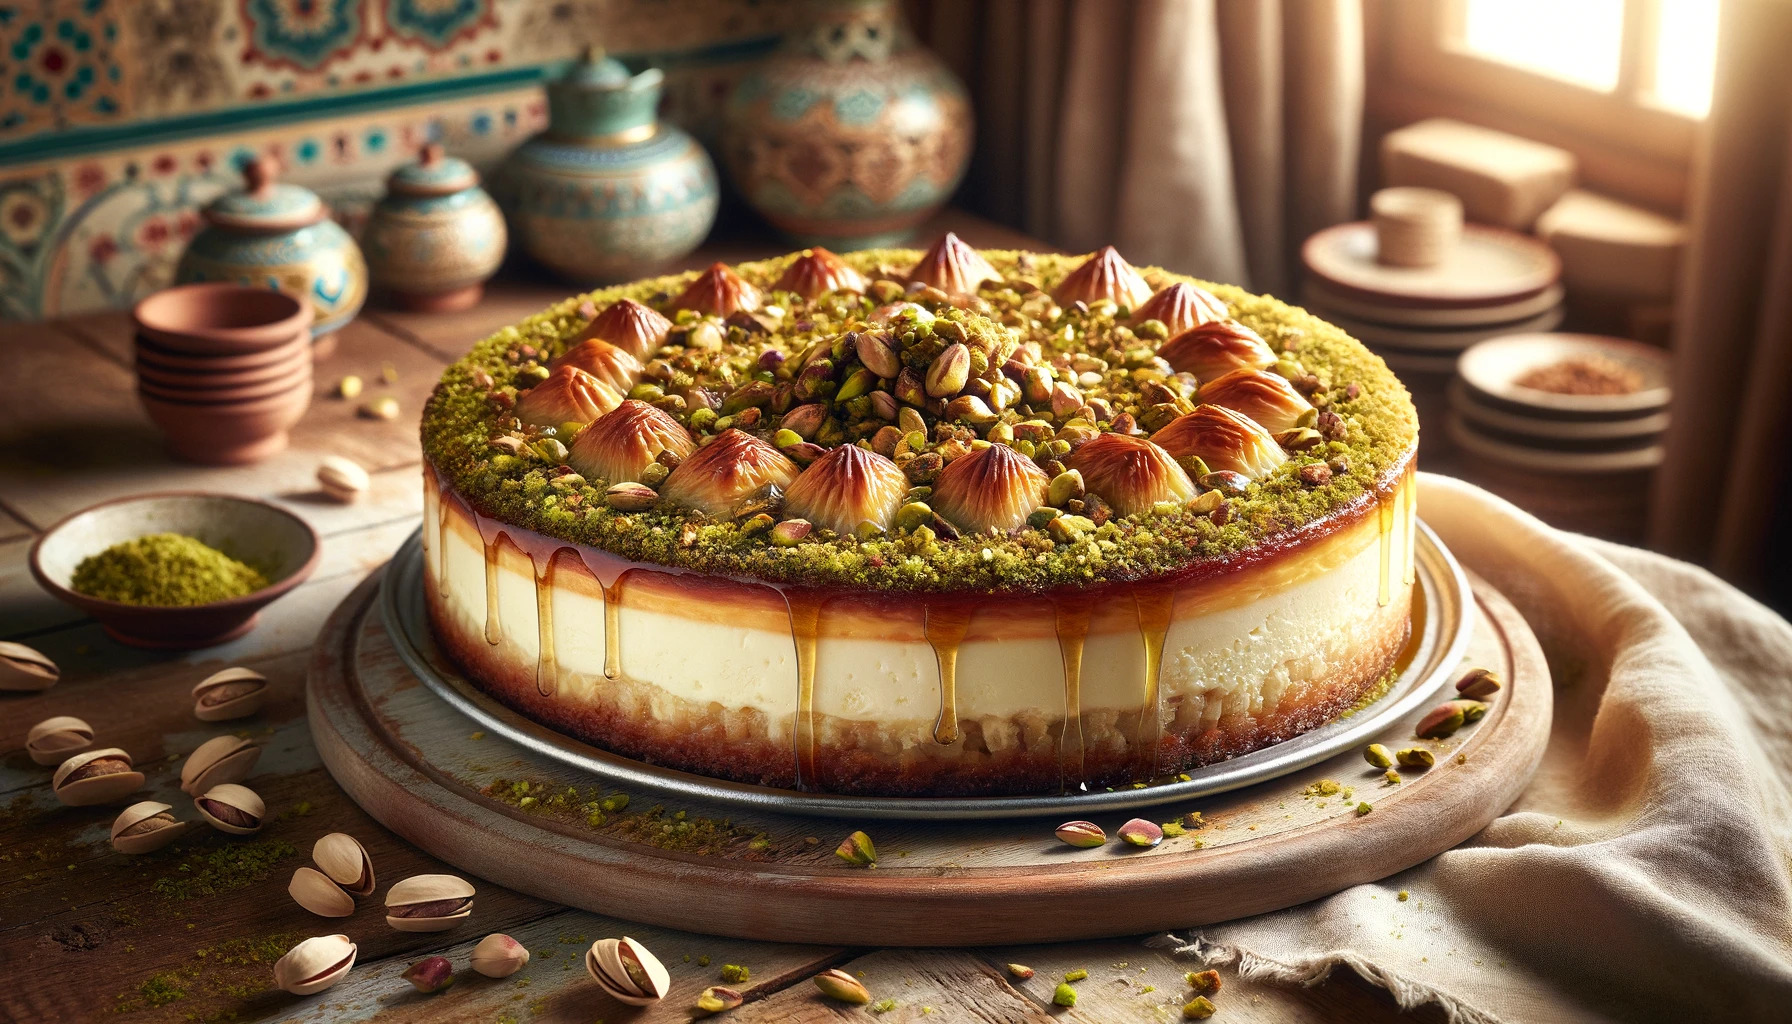 Baklava Cheesecake: Middle East’s Signature Cake